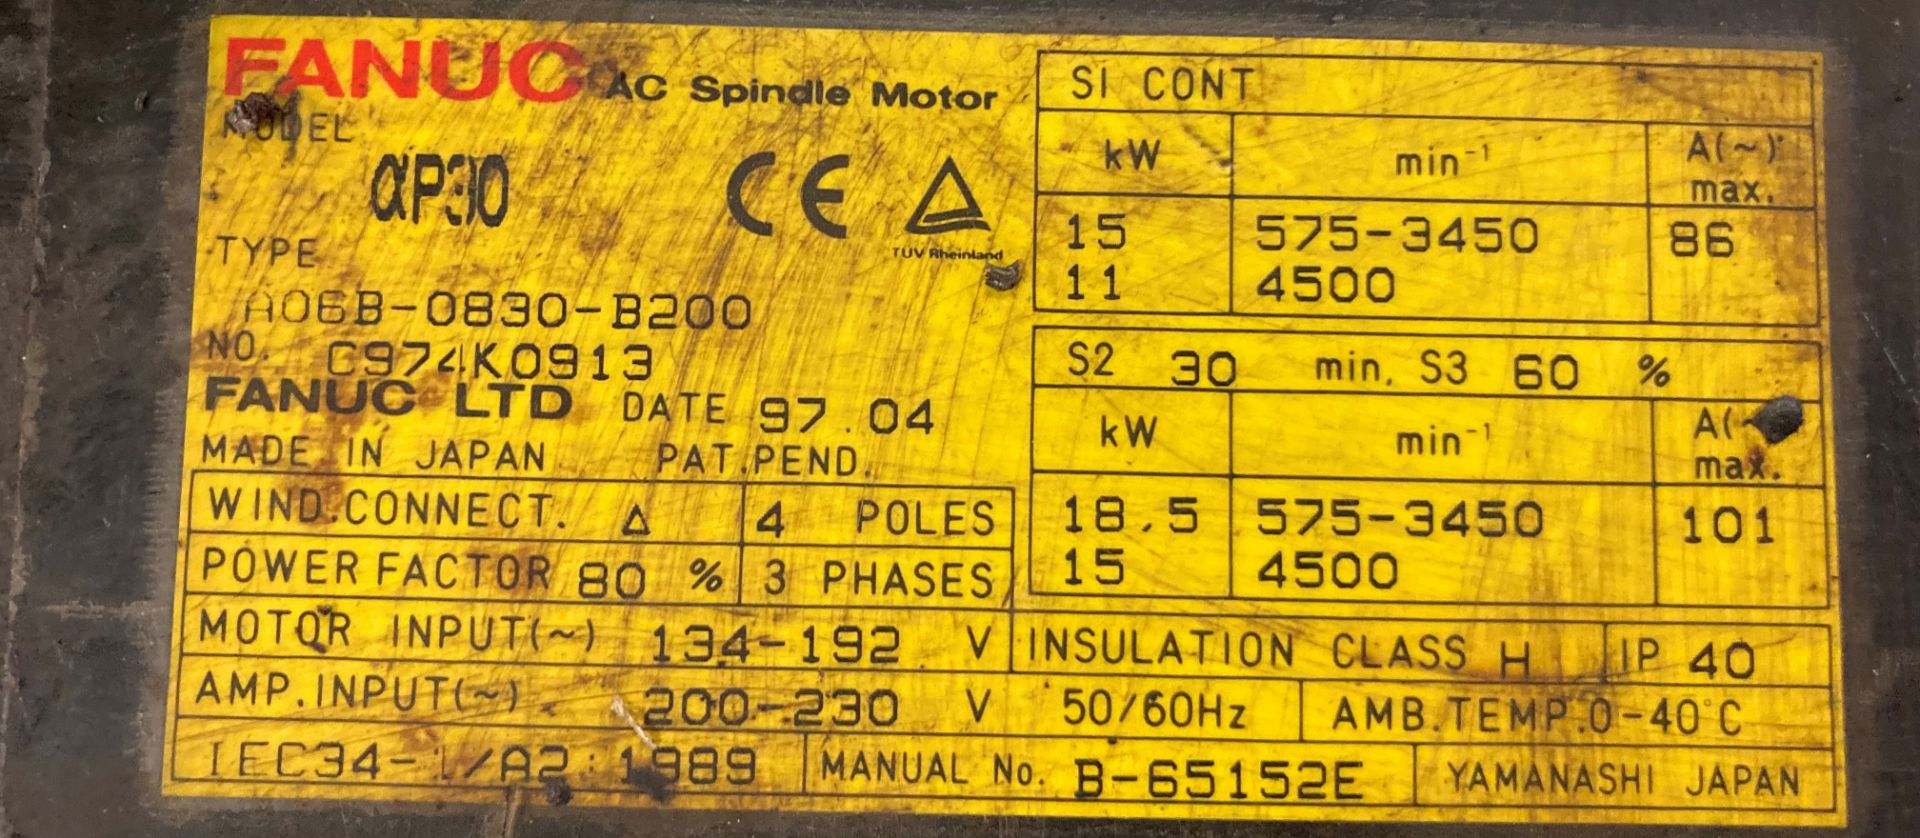 Fanuc AC Spindle Motor, M/N: aP30 - Image 4 of 4